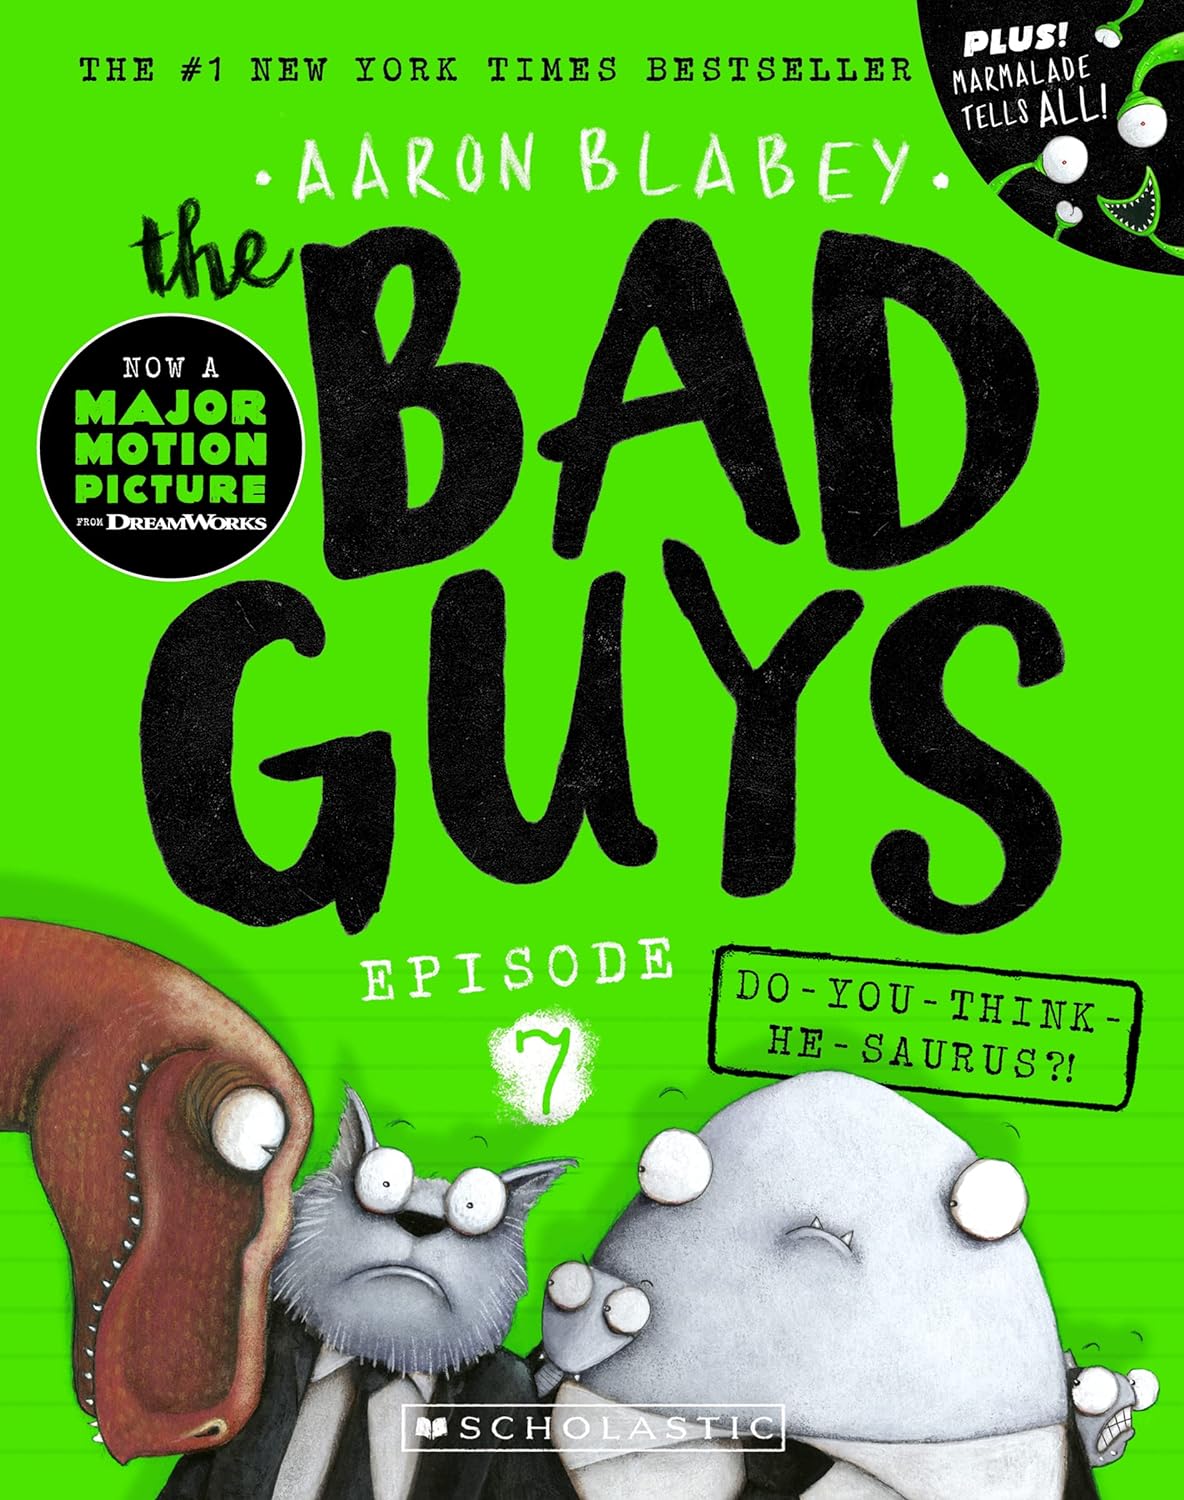 THE BAD GUYS VOL 07